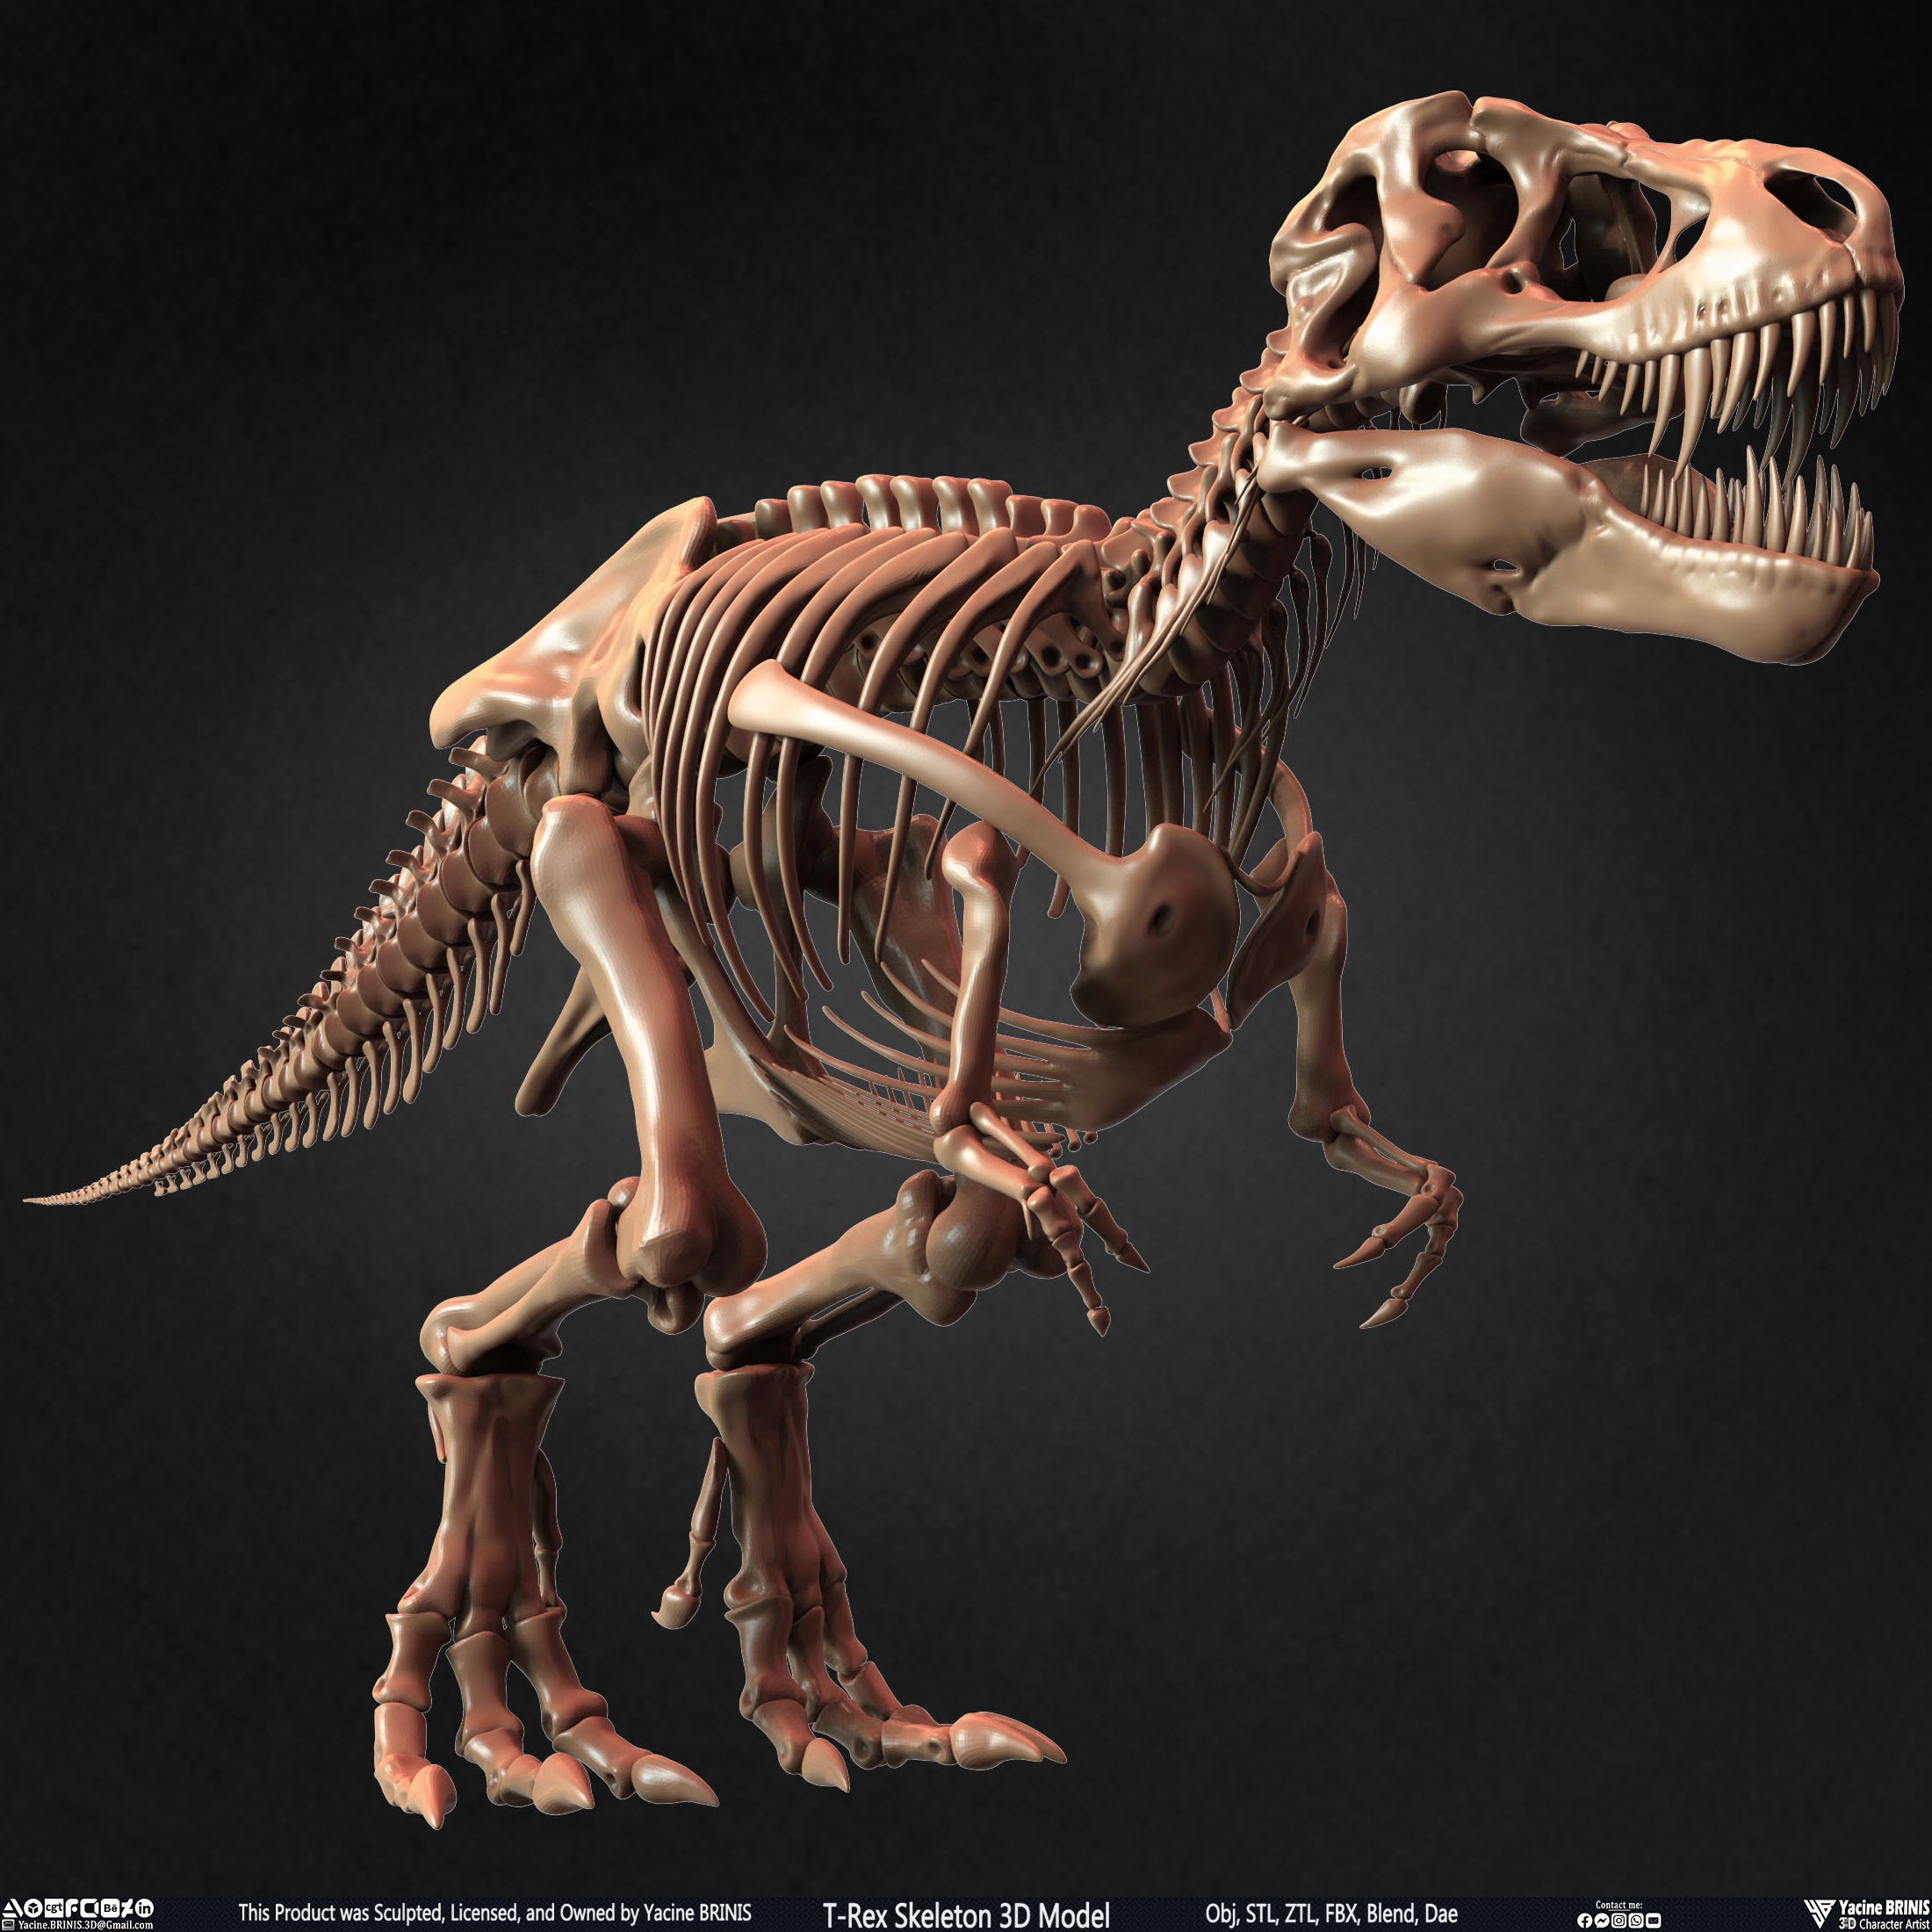 T-Rex Skeleton 3D Model (Tyrannosaurus Rex) Sculpted By Yacine BRINIS Set 004